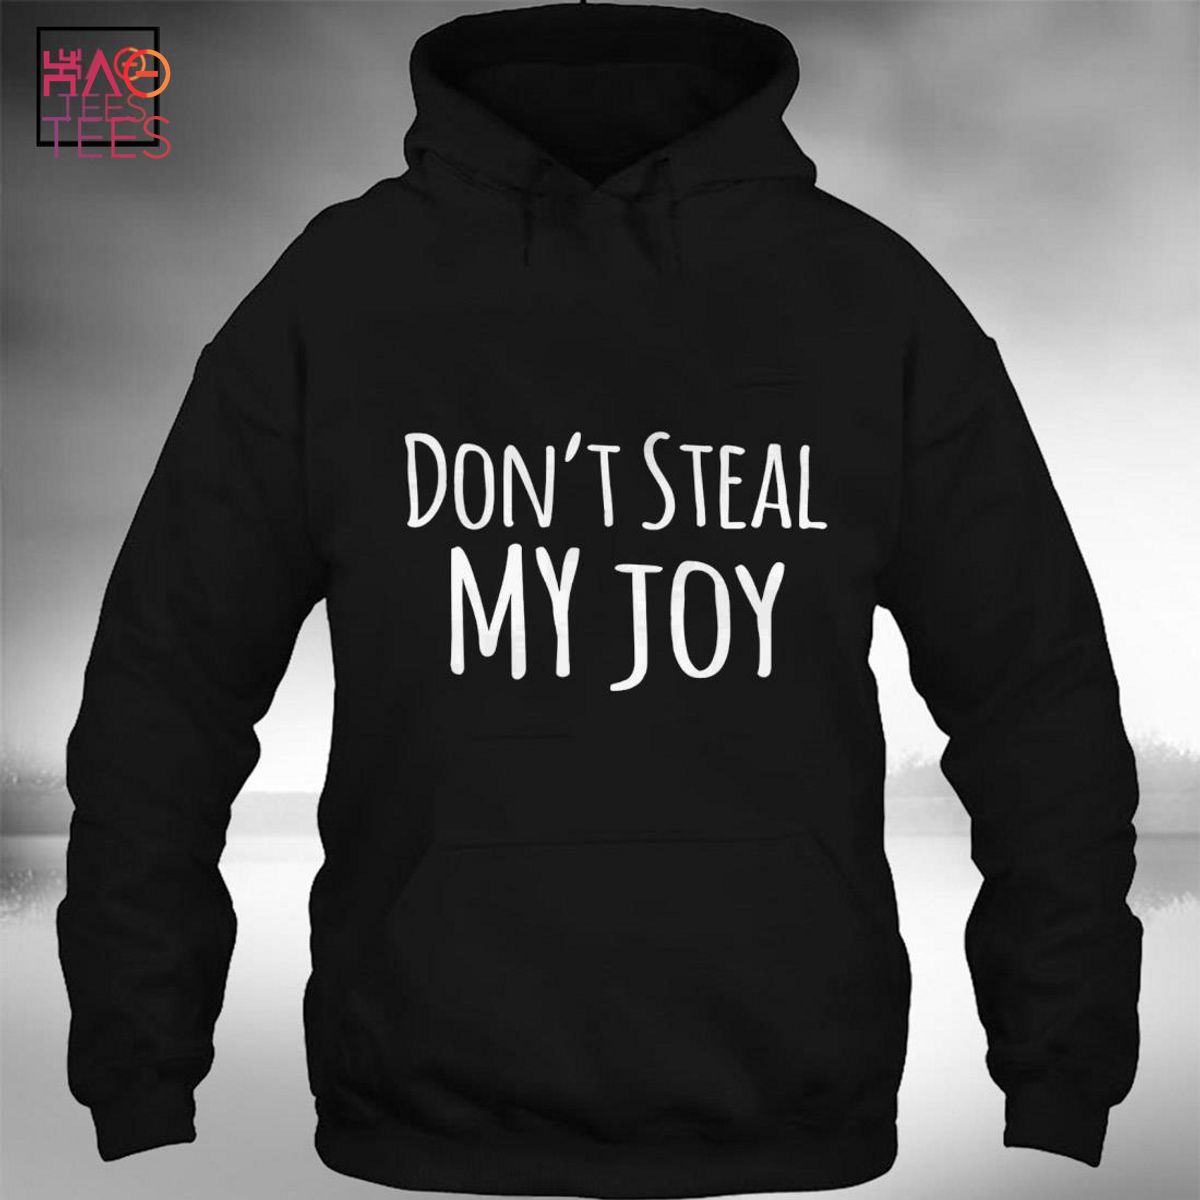 Don't Steal My Joy T-Shirt